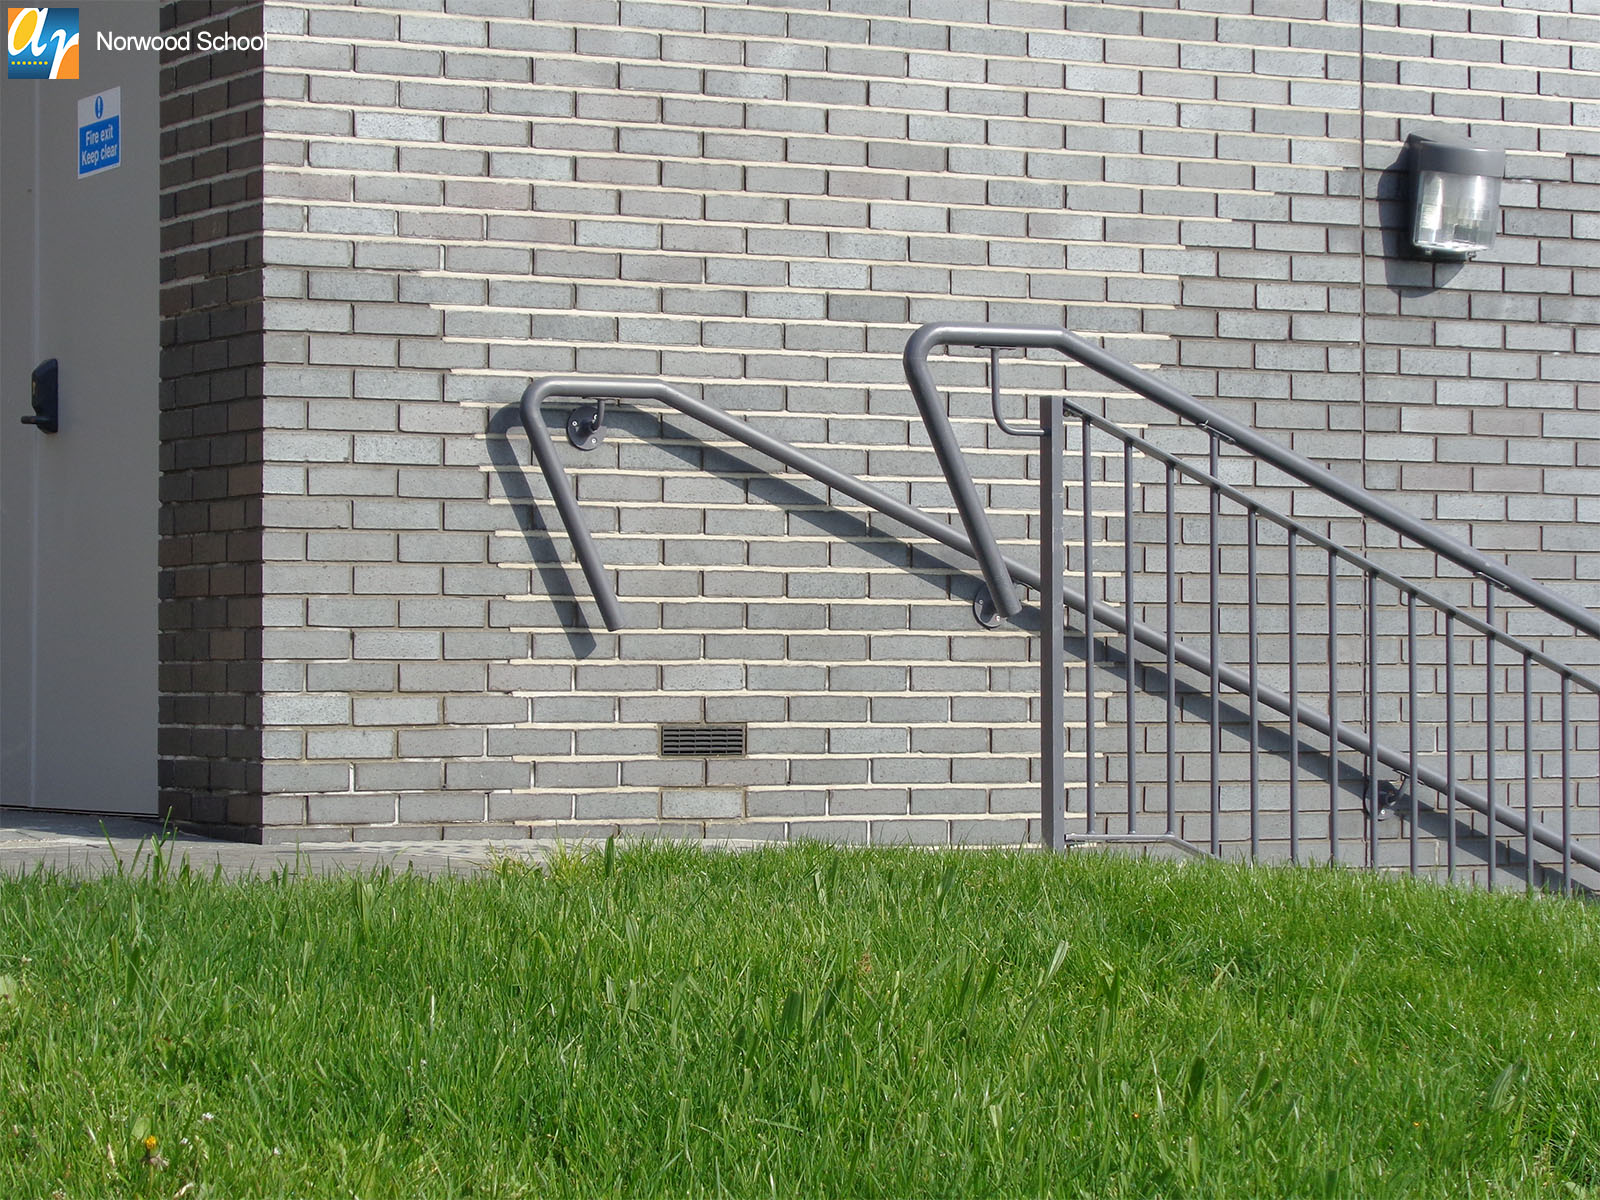 Norwood School metal handrail